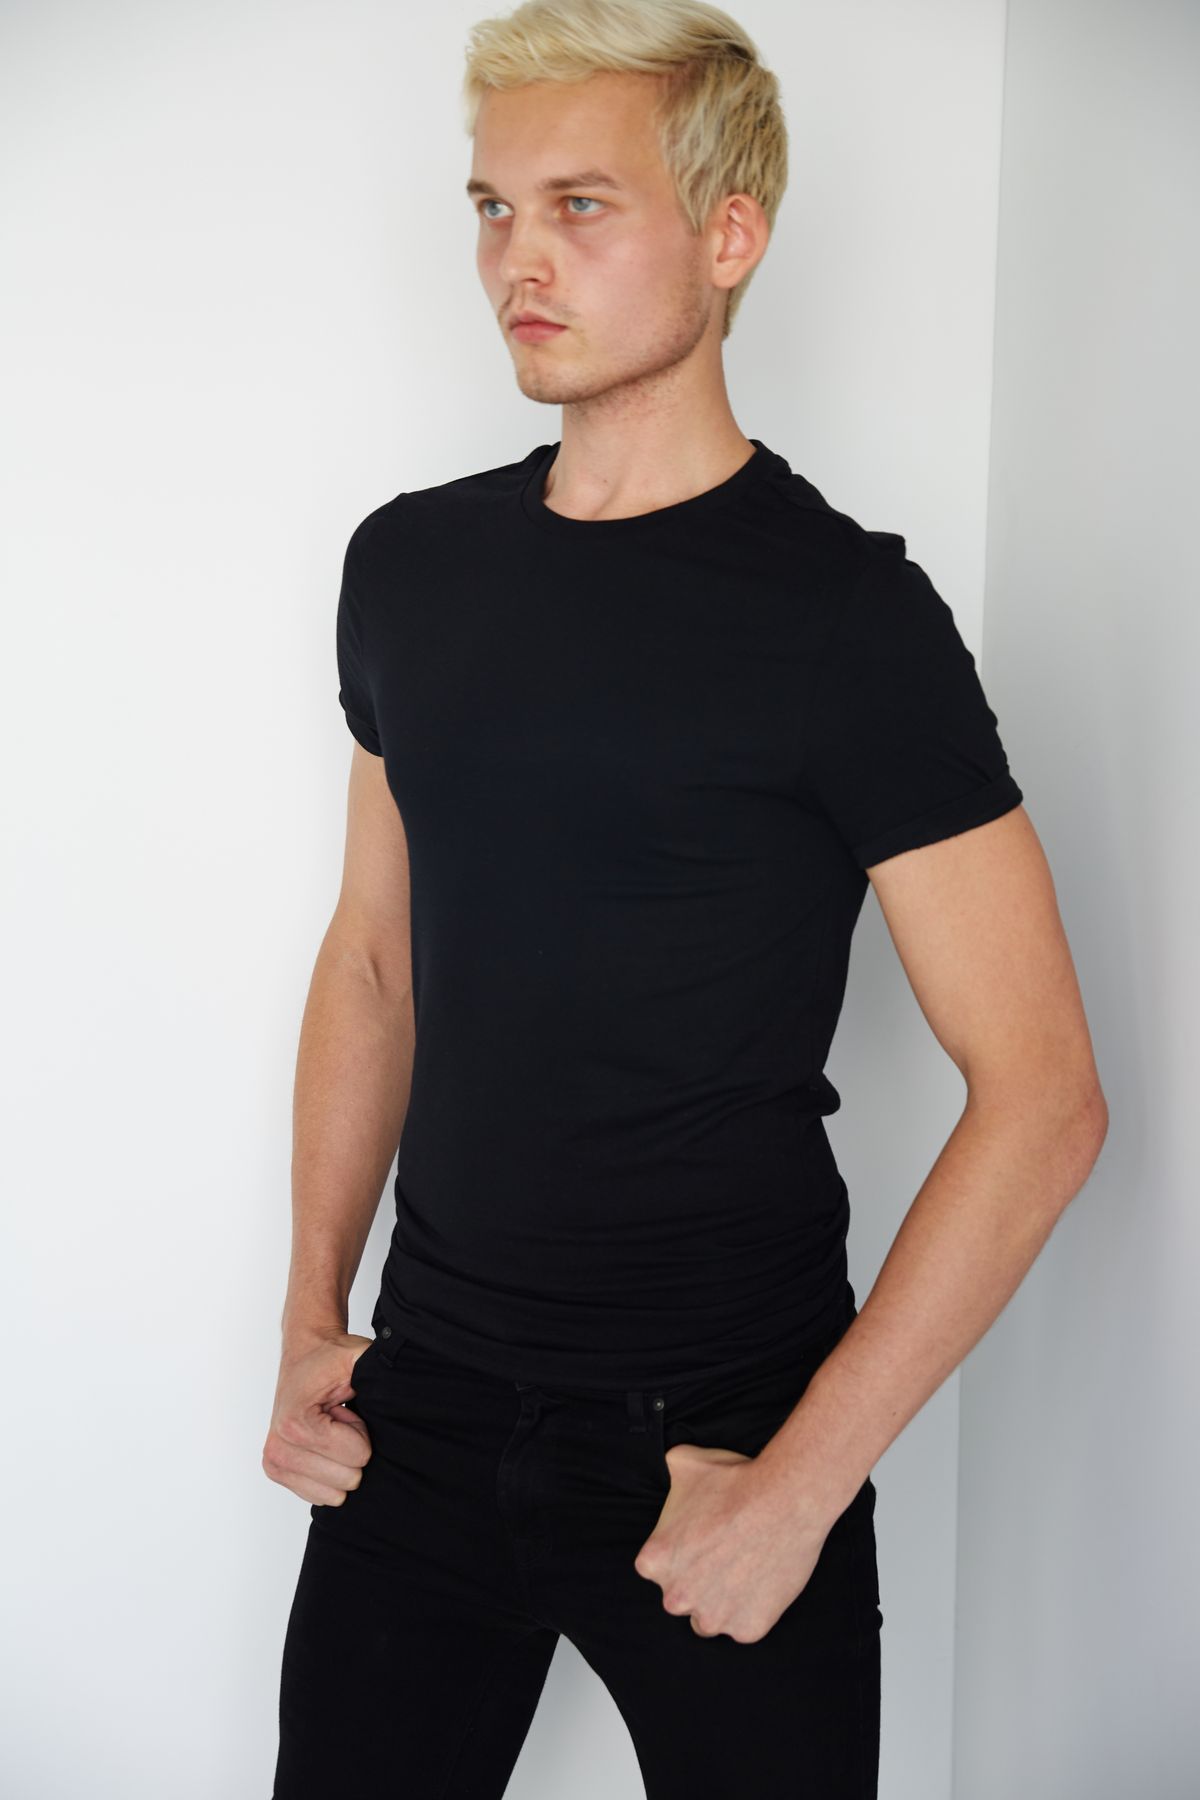 Model Trevor Mullin